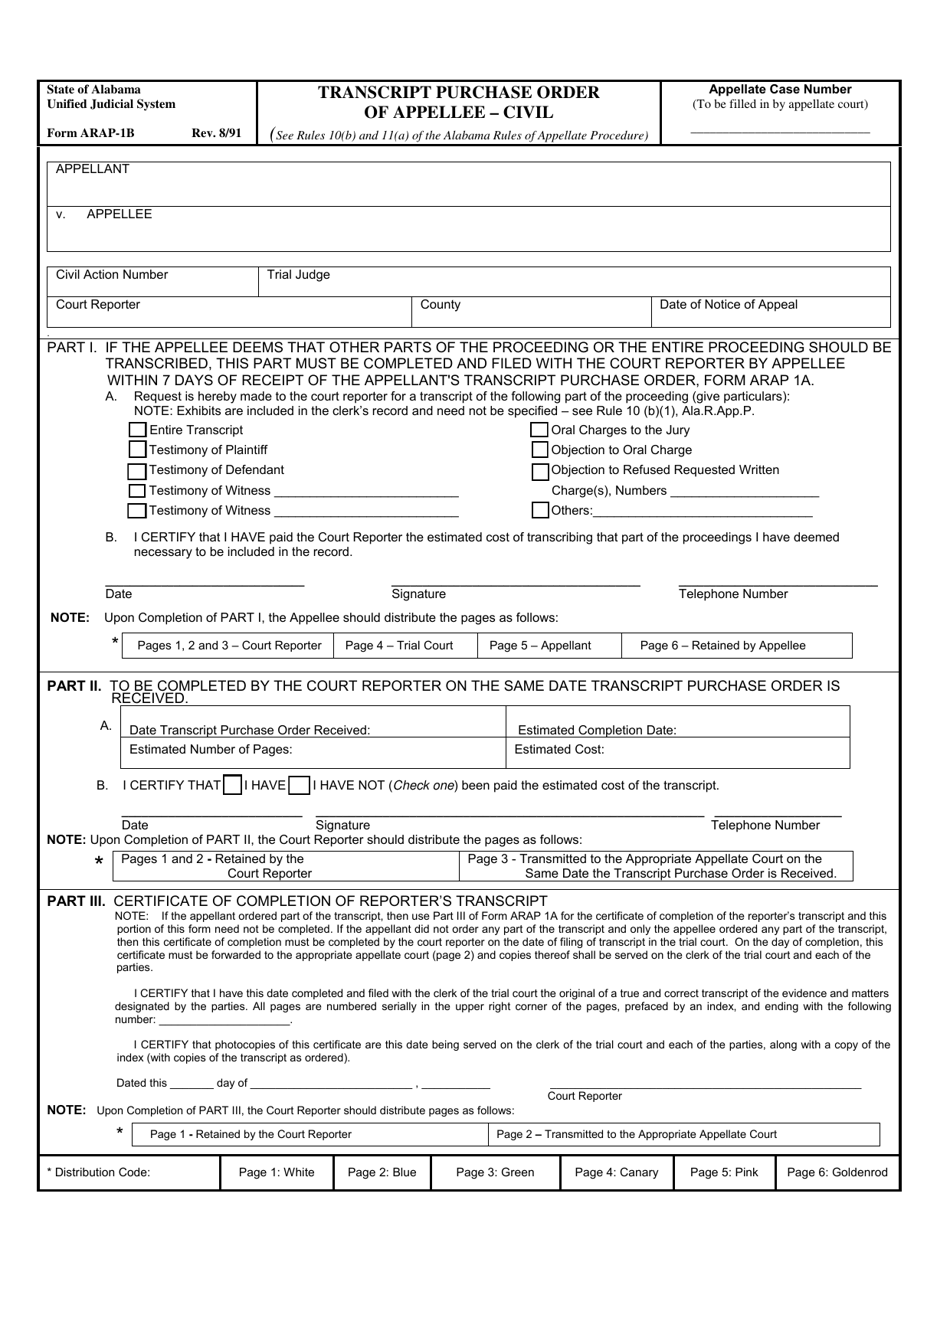 Form ARAP-1B Transcript Purchase Order of Appellee - Civil - Alabama, Page 1